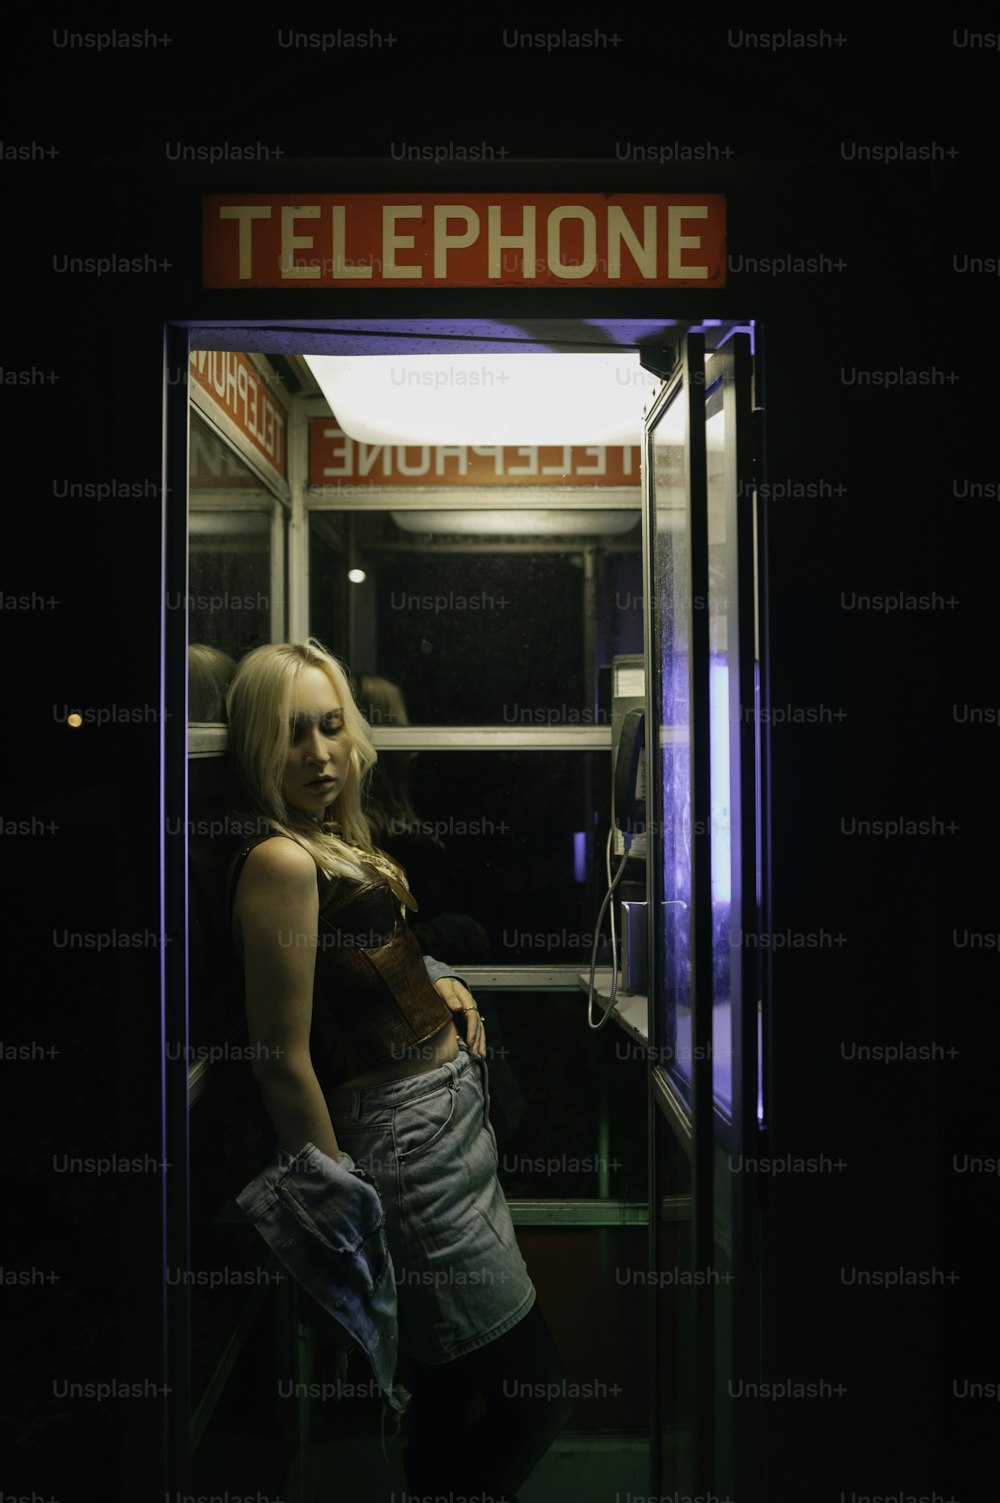 Una mujer parada frente a una cabina telefónica